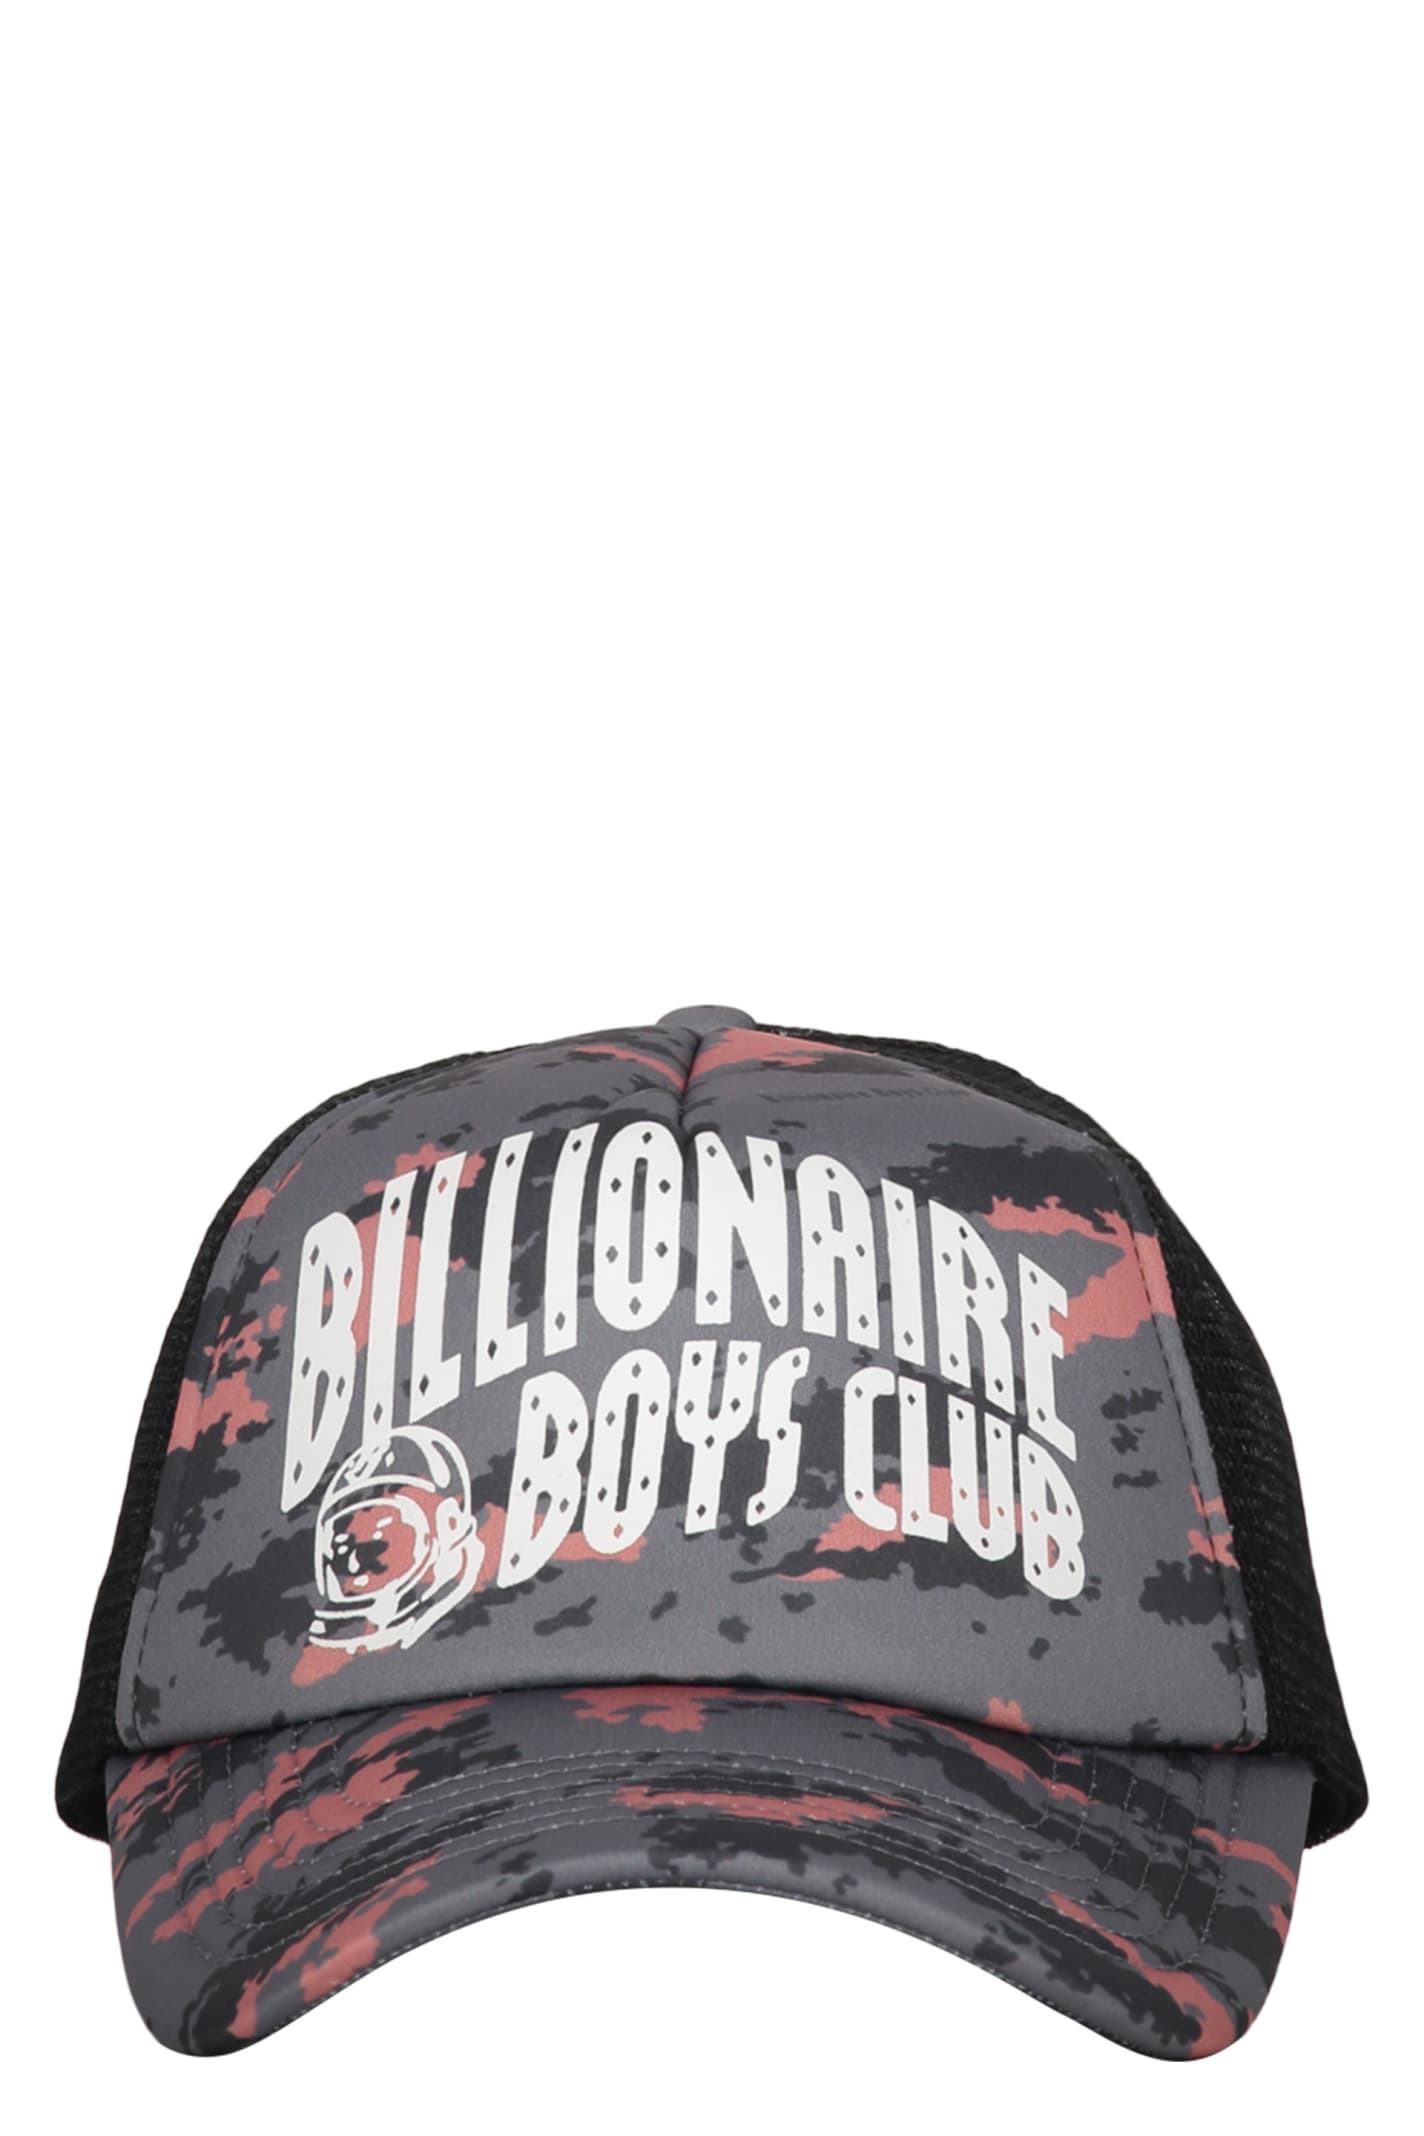 Billionaire Boys Club Baseball Cap